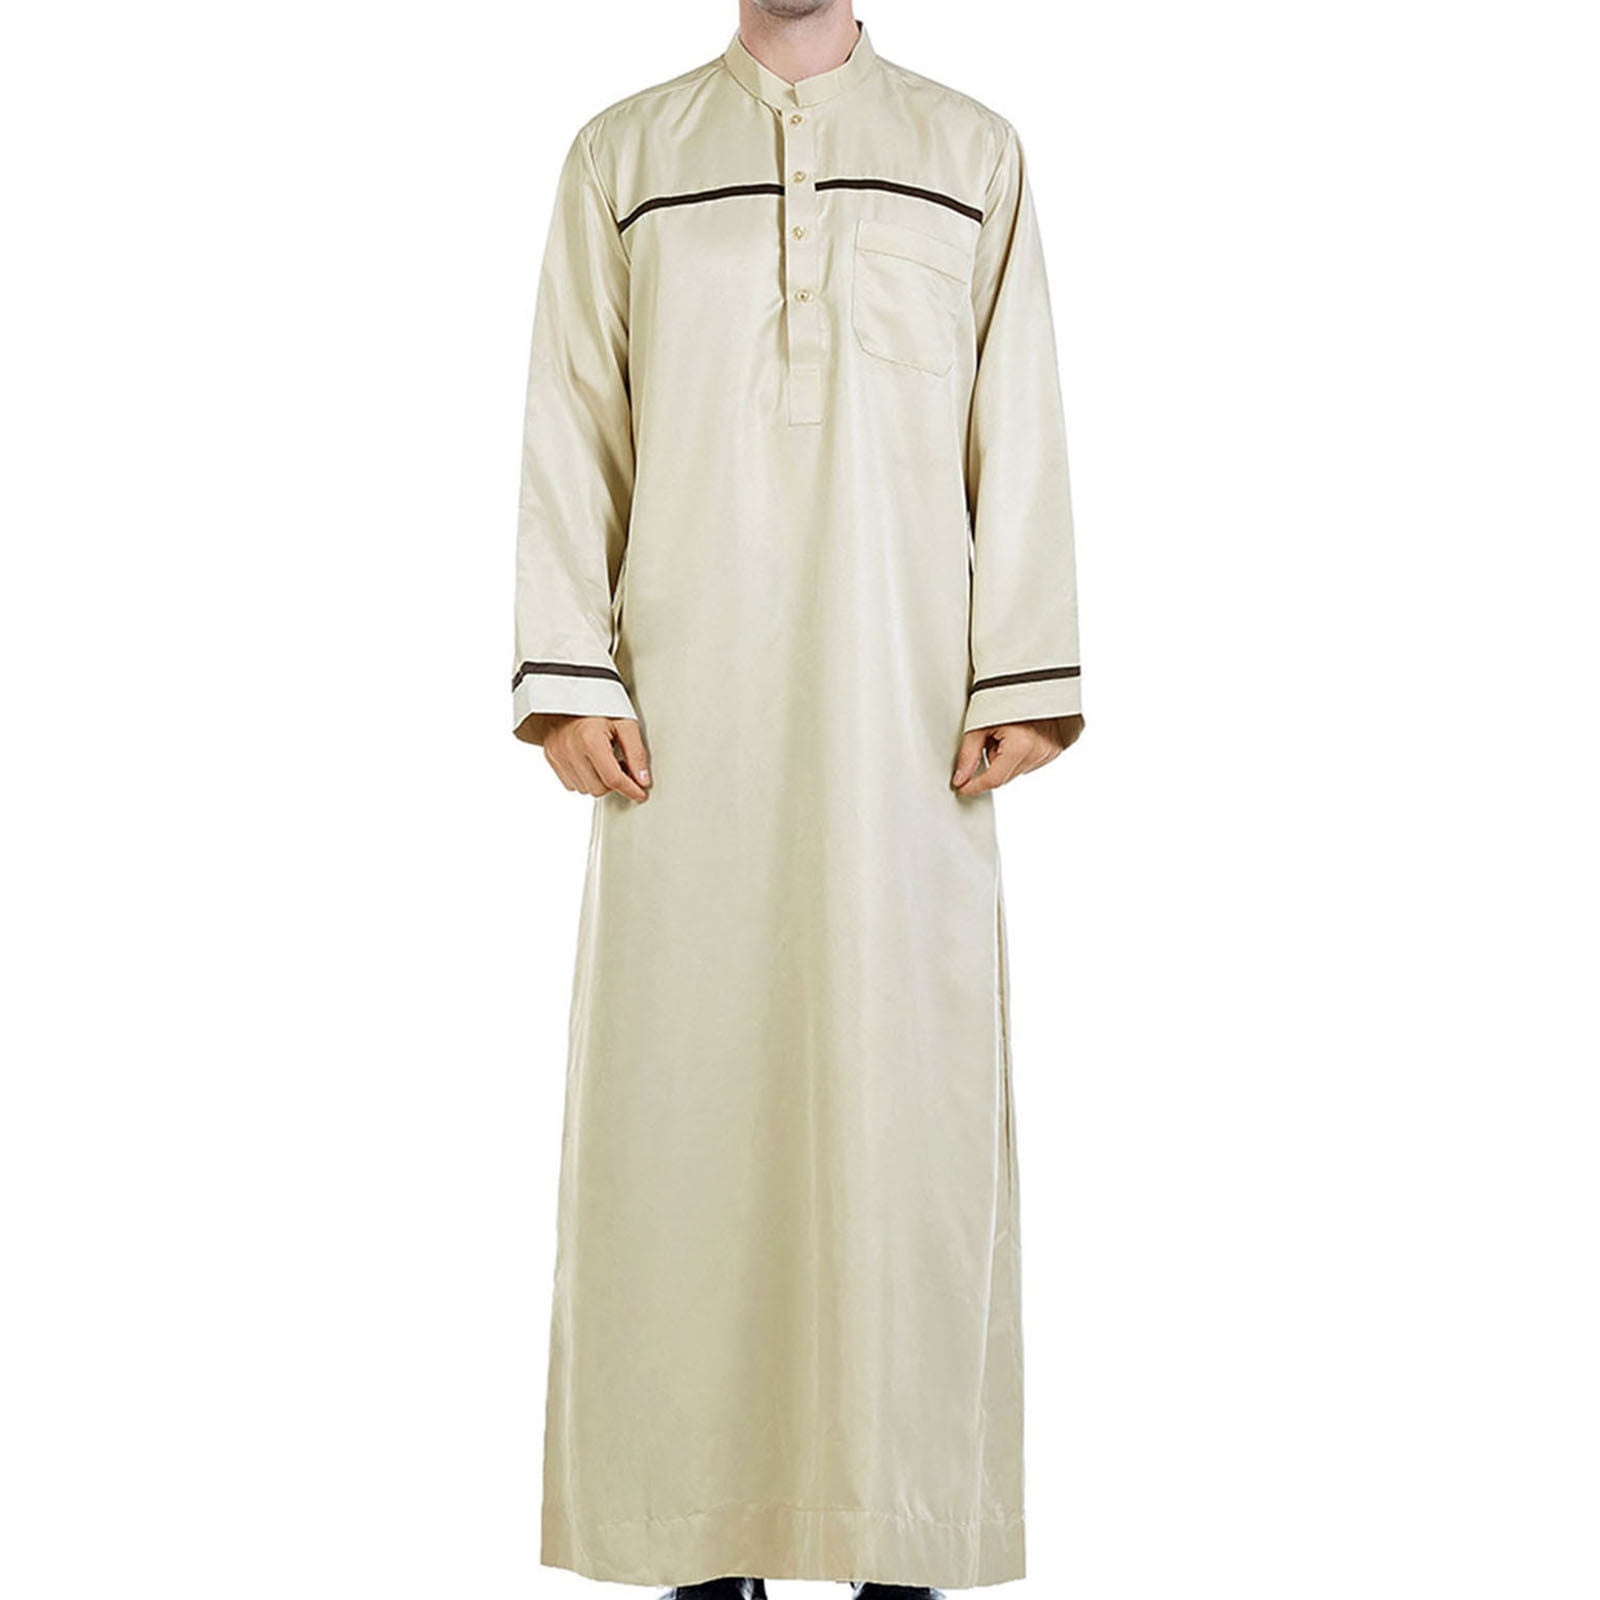 Mens Muslim Robe Full Length Long Sleeve Nightshirt Plain Muslim Kaftan ...